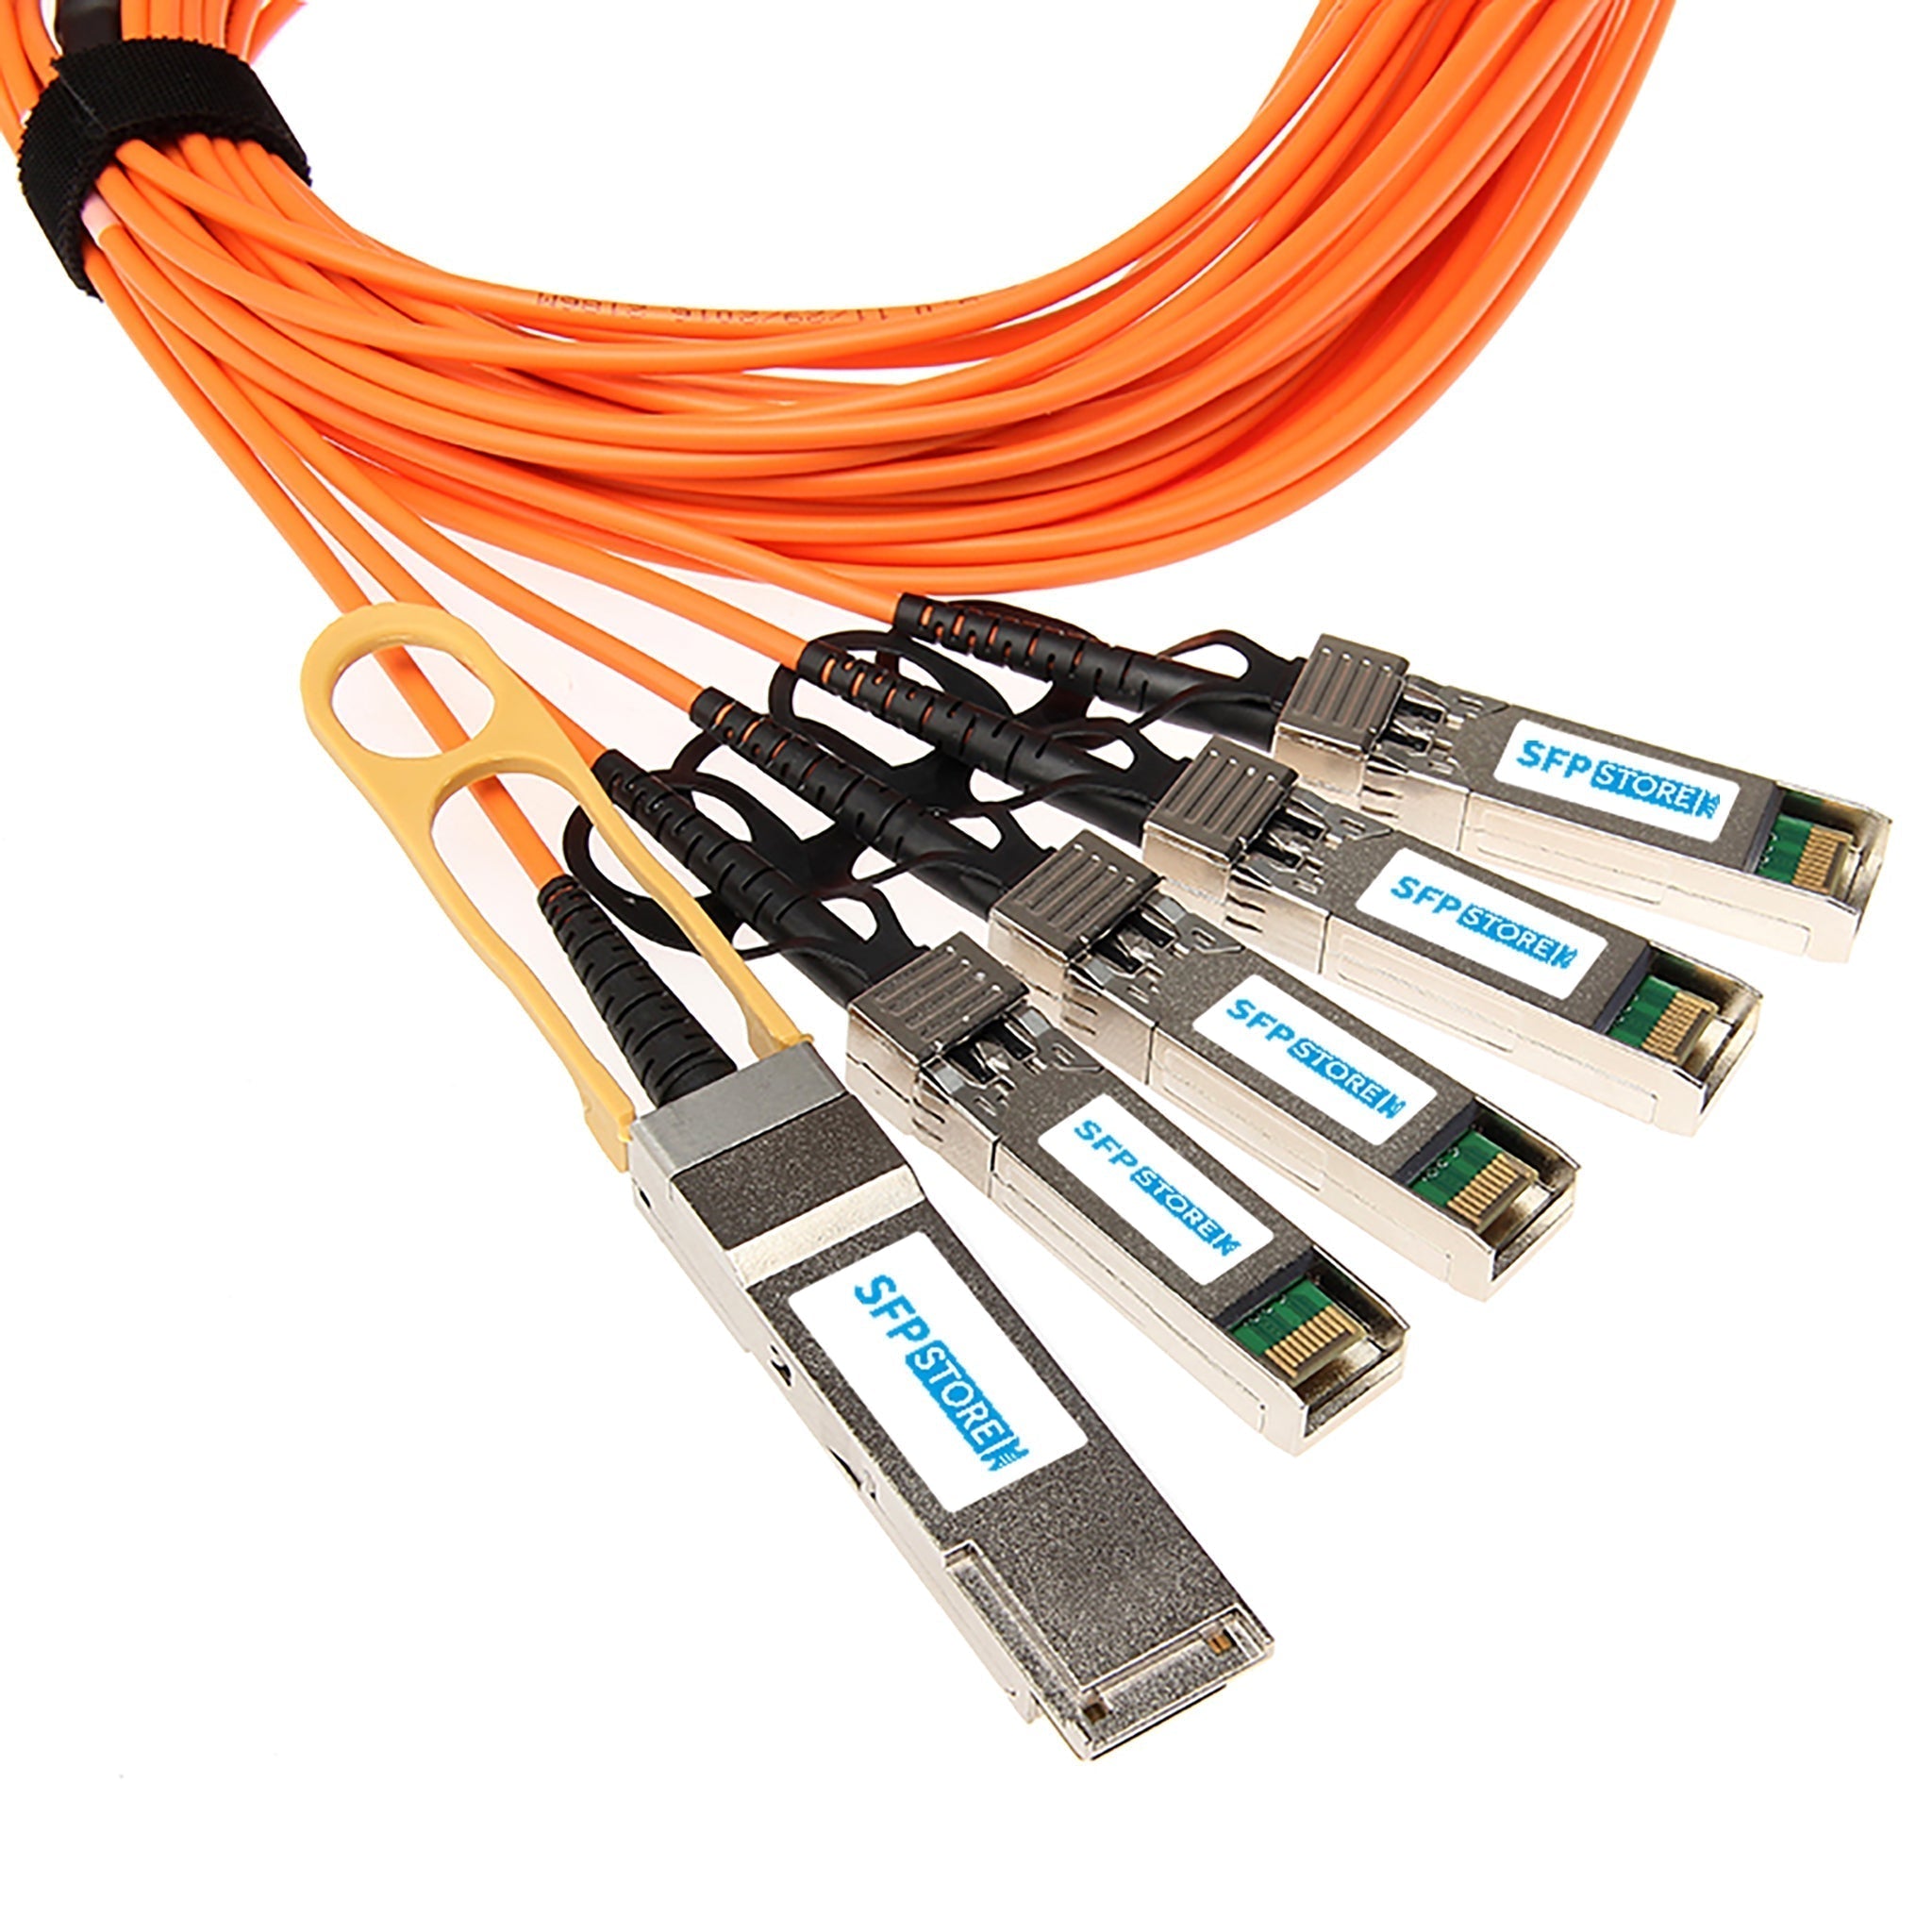 QSFP-4X10G-AOC10M-C - 10m Cisco Compatible 40G QSFP+ to 4 x 10G SFP+ Active Optical Cable